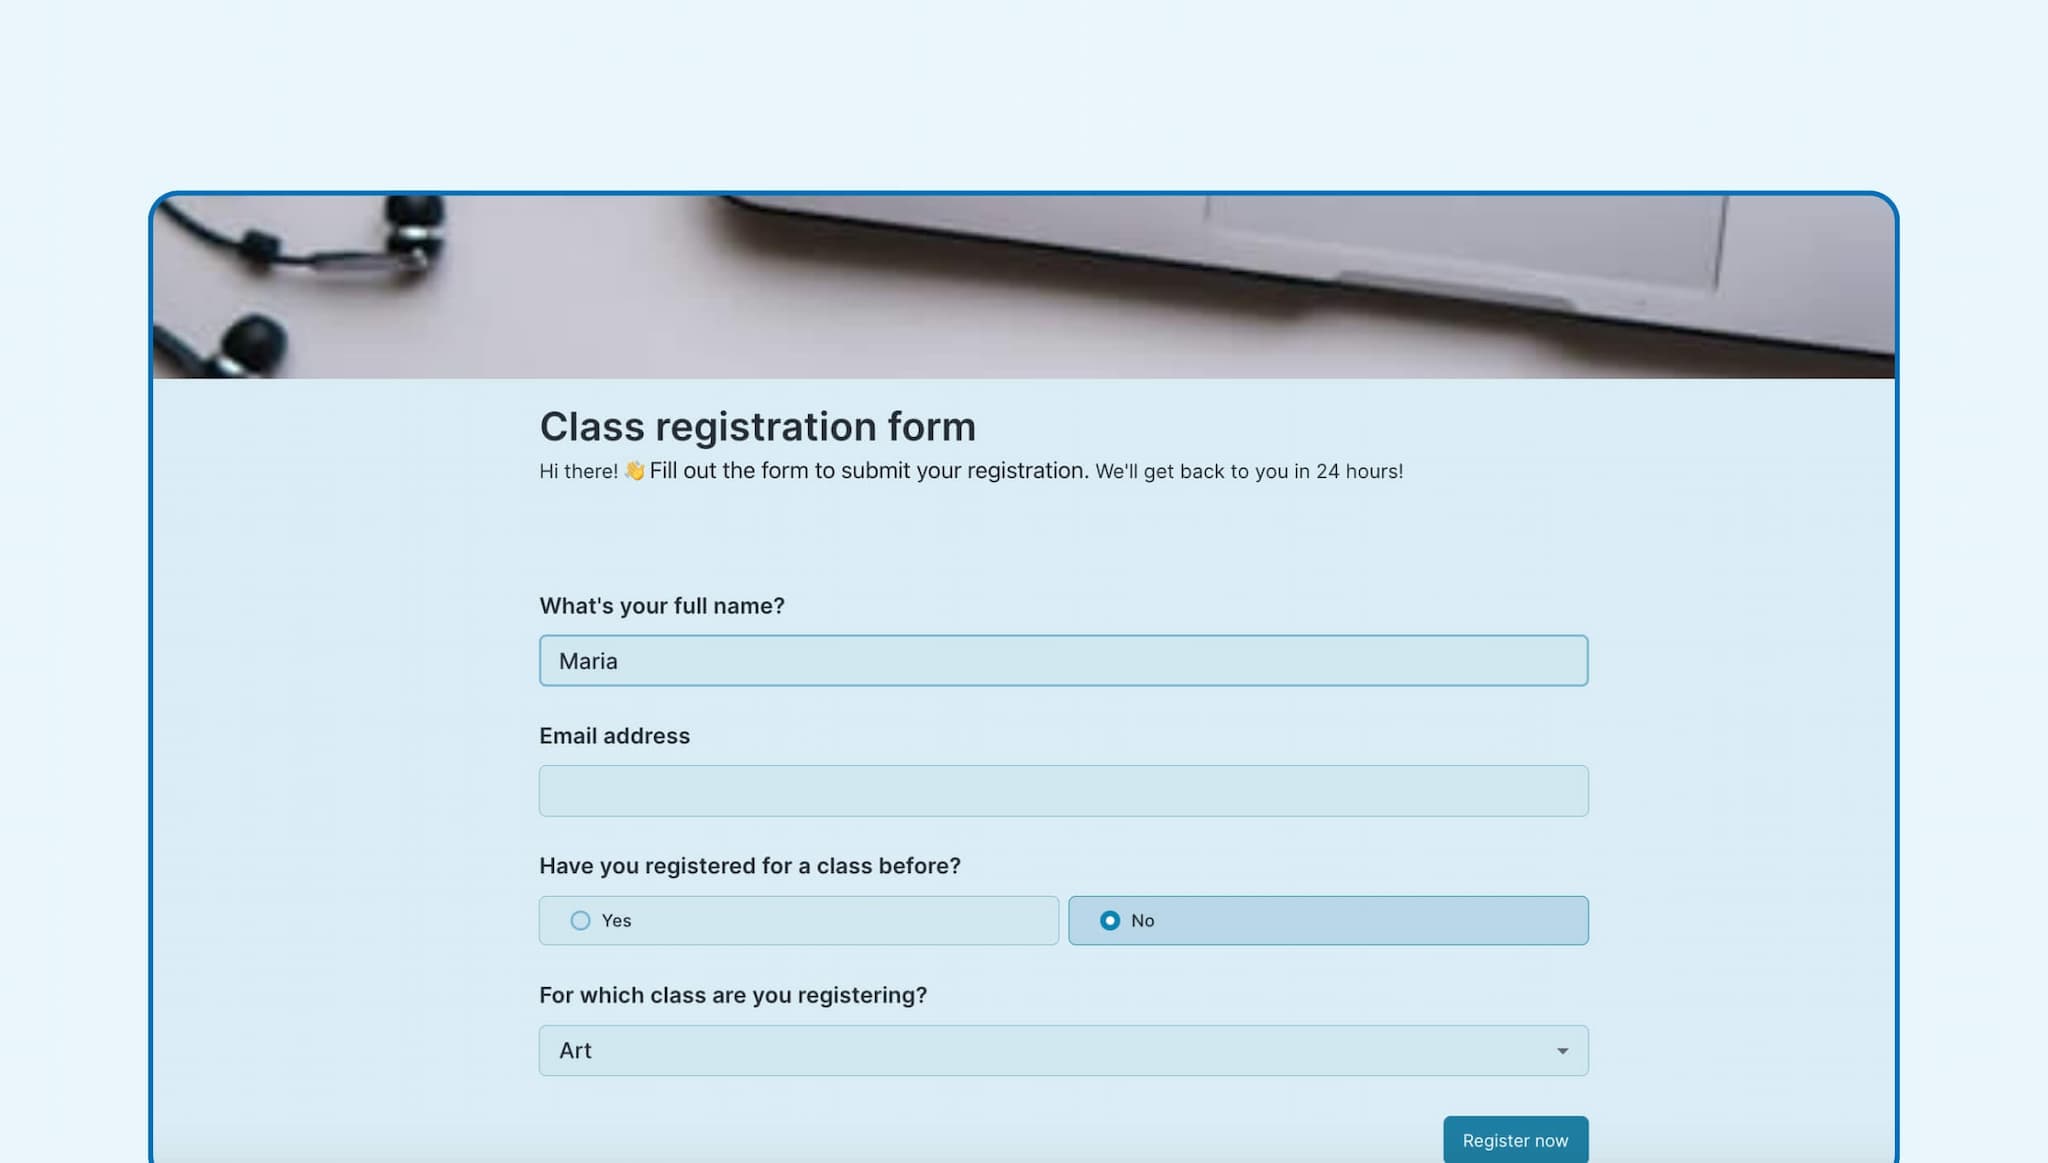 Class registration form